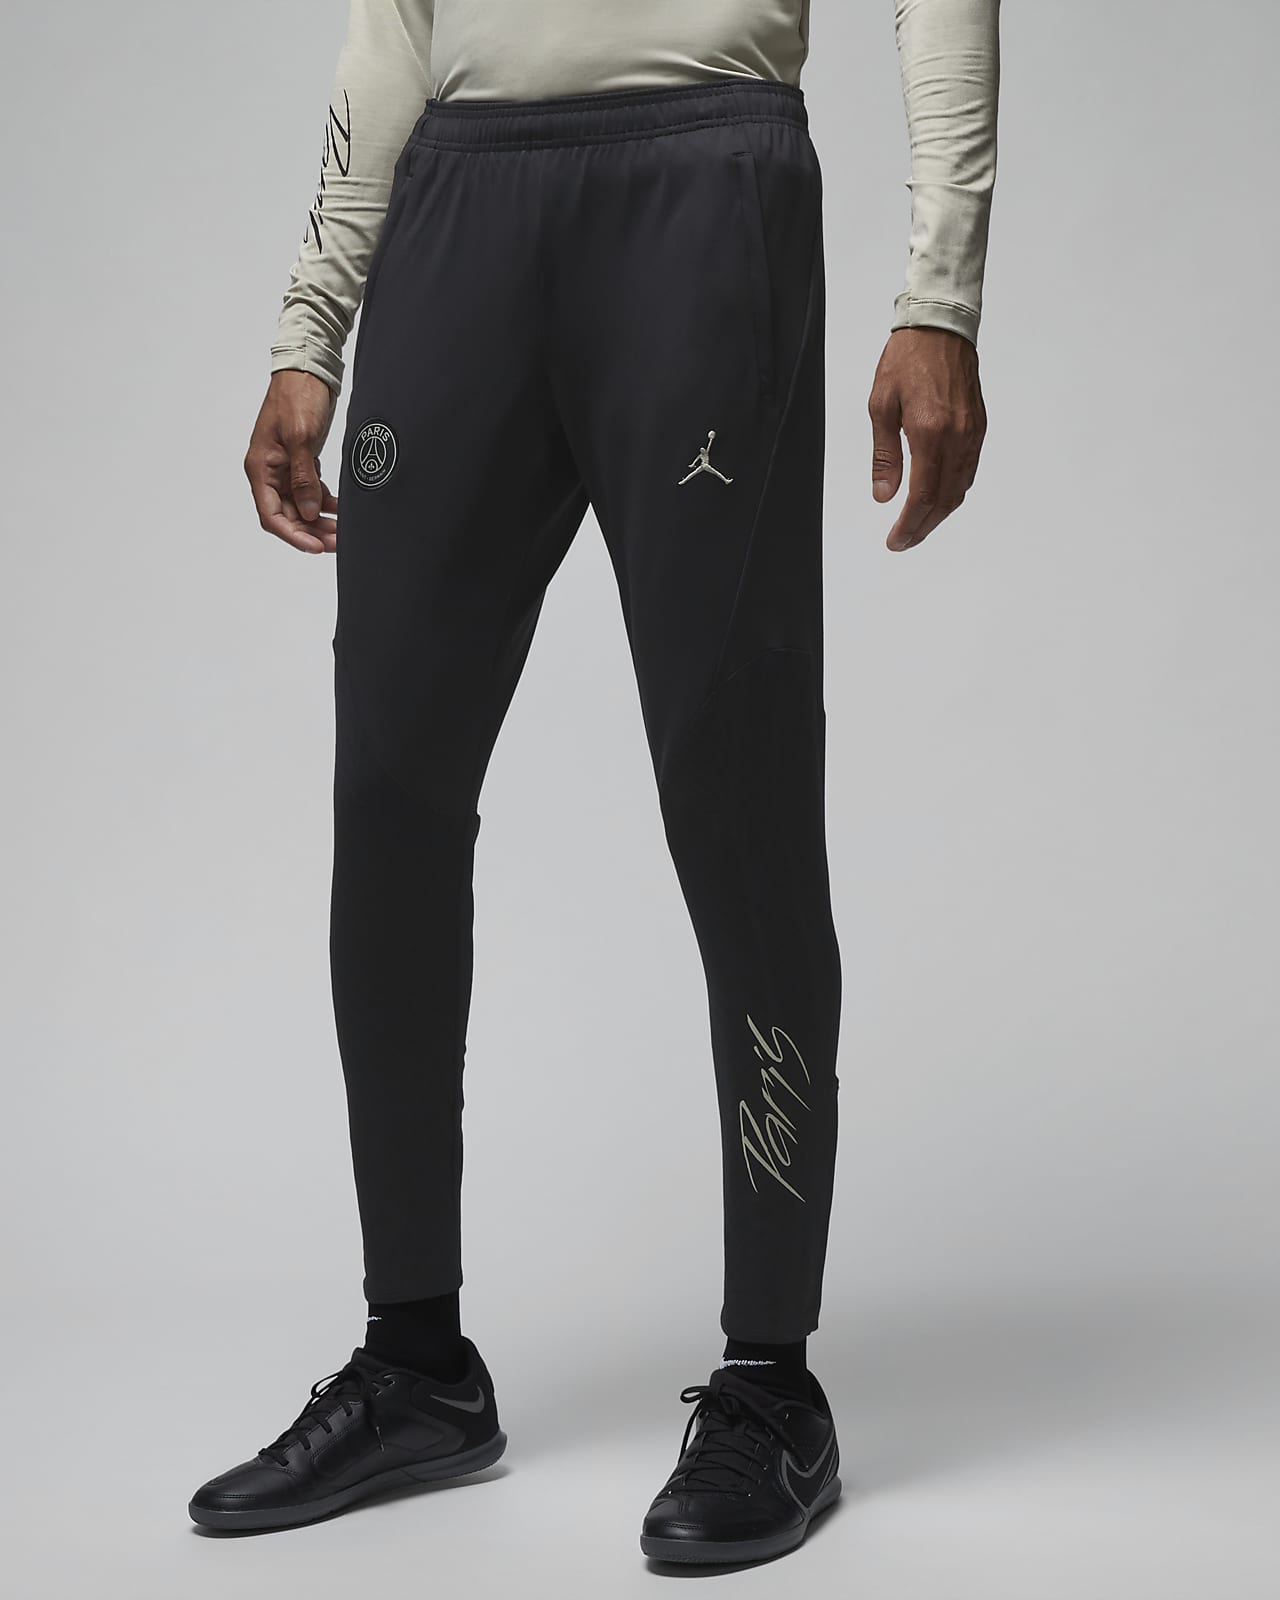 Nike Women's Jordan 23 Engineered Utility Trousers Black/Black/Black - SS22  - US